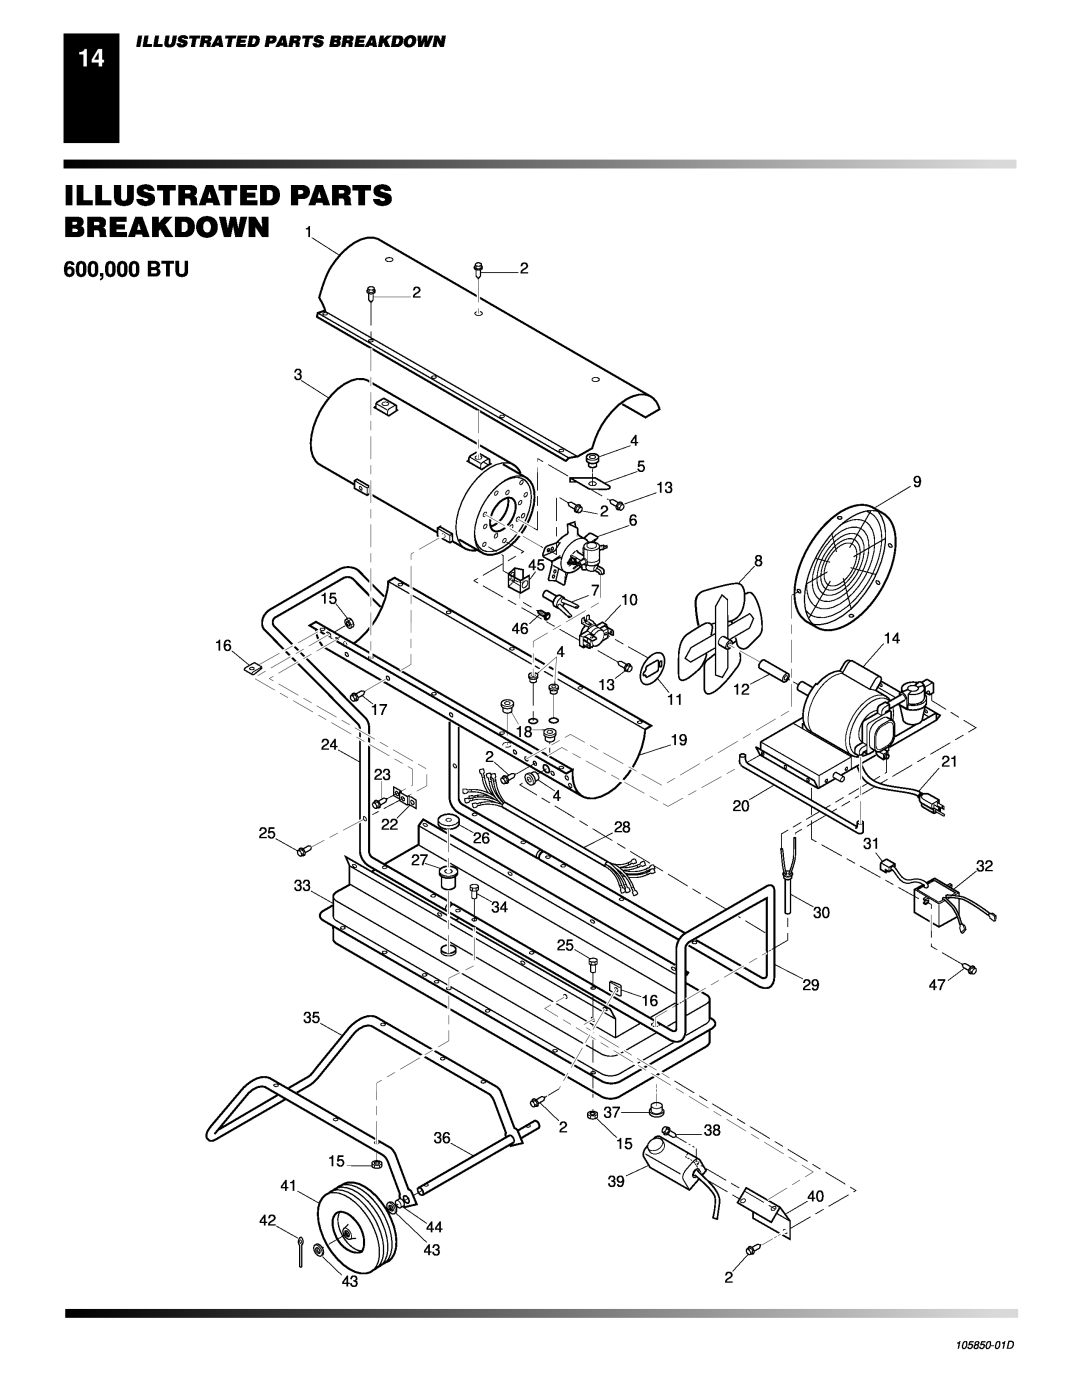 Desa CP600AK, CP350AK owner manual 600,000 BTU, Illustrated Parts Breakdown 